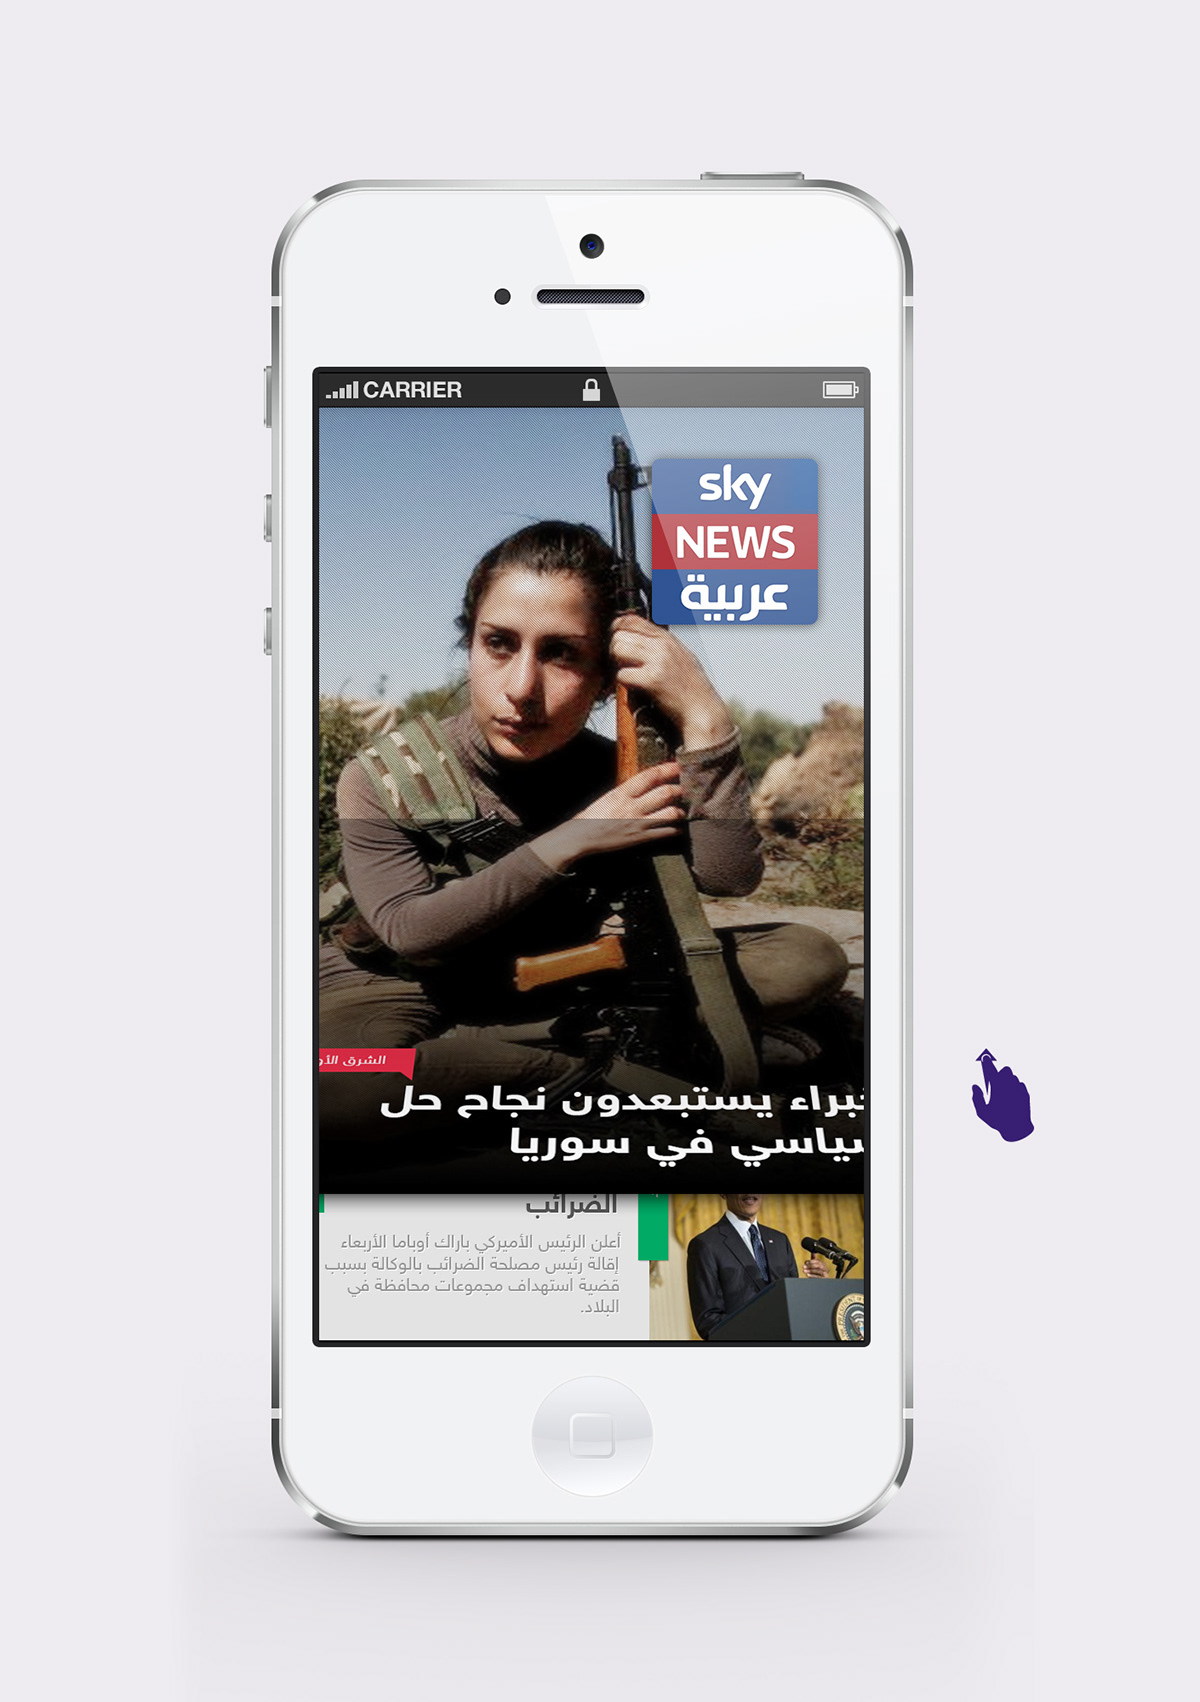 Sky News Arabia Mobile app